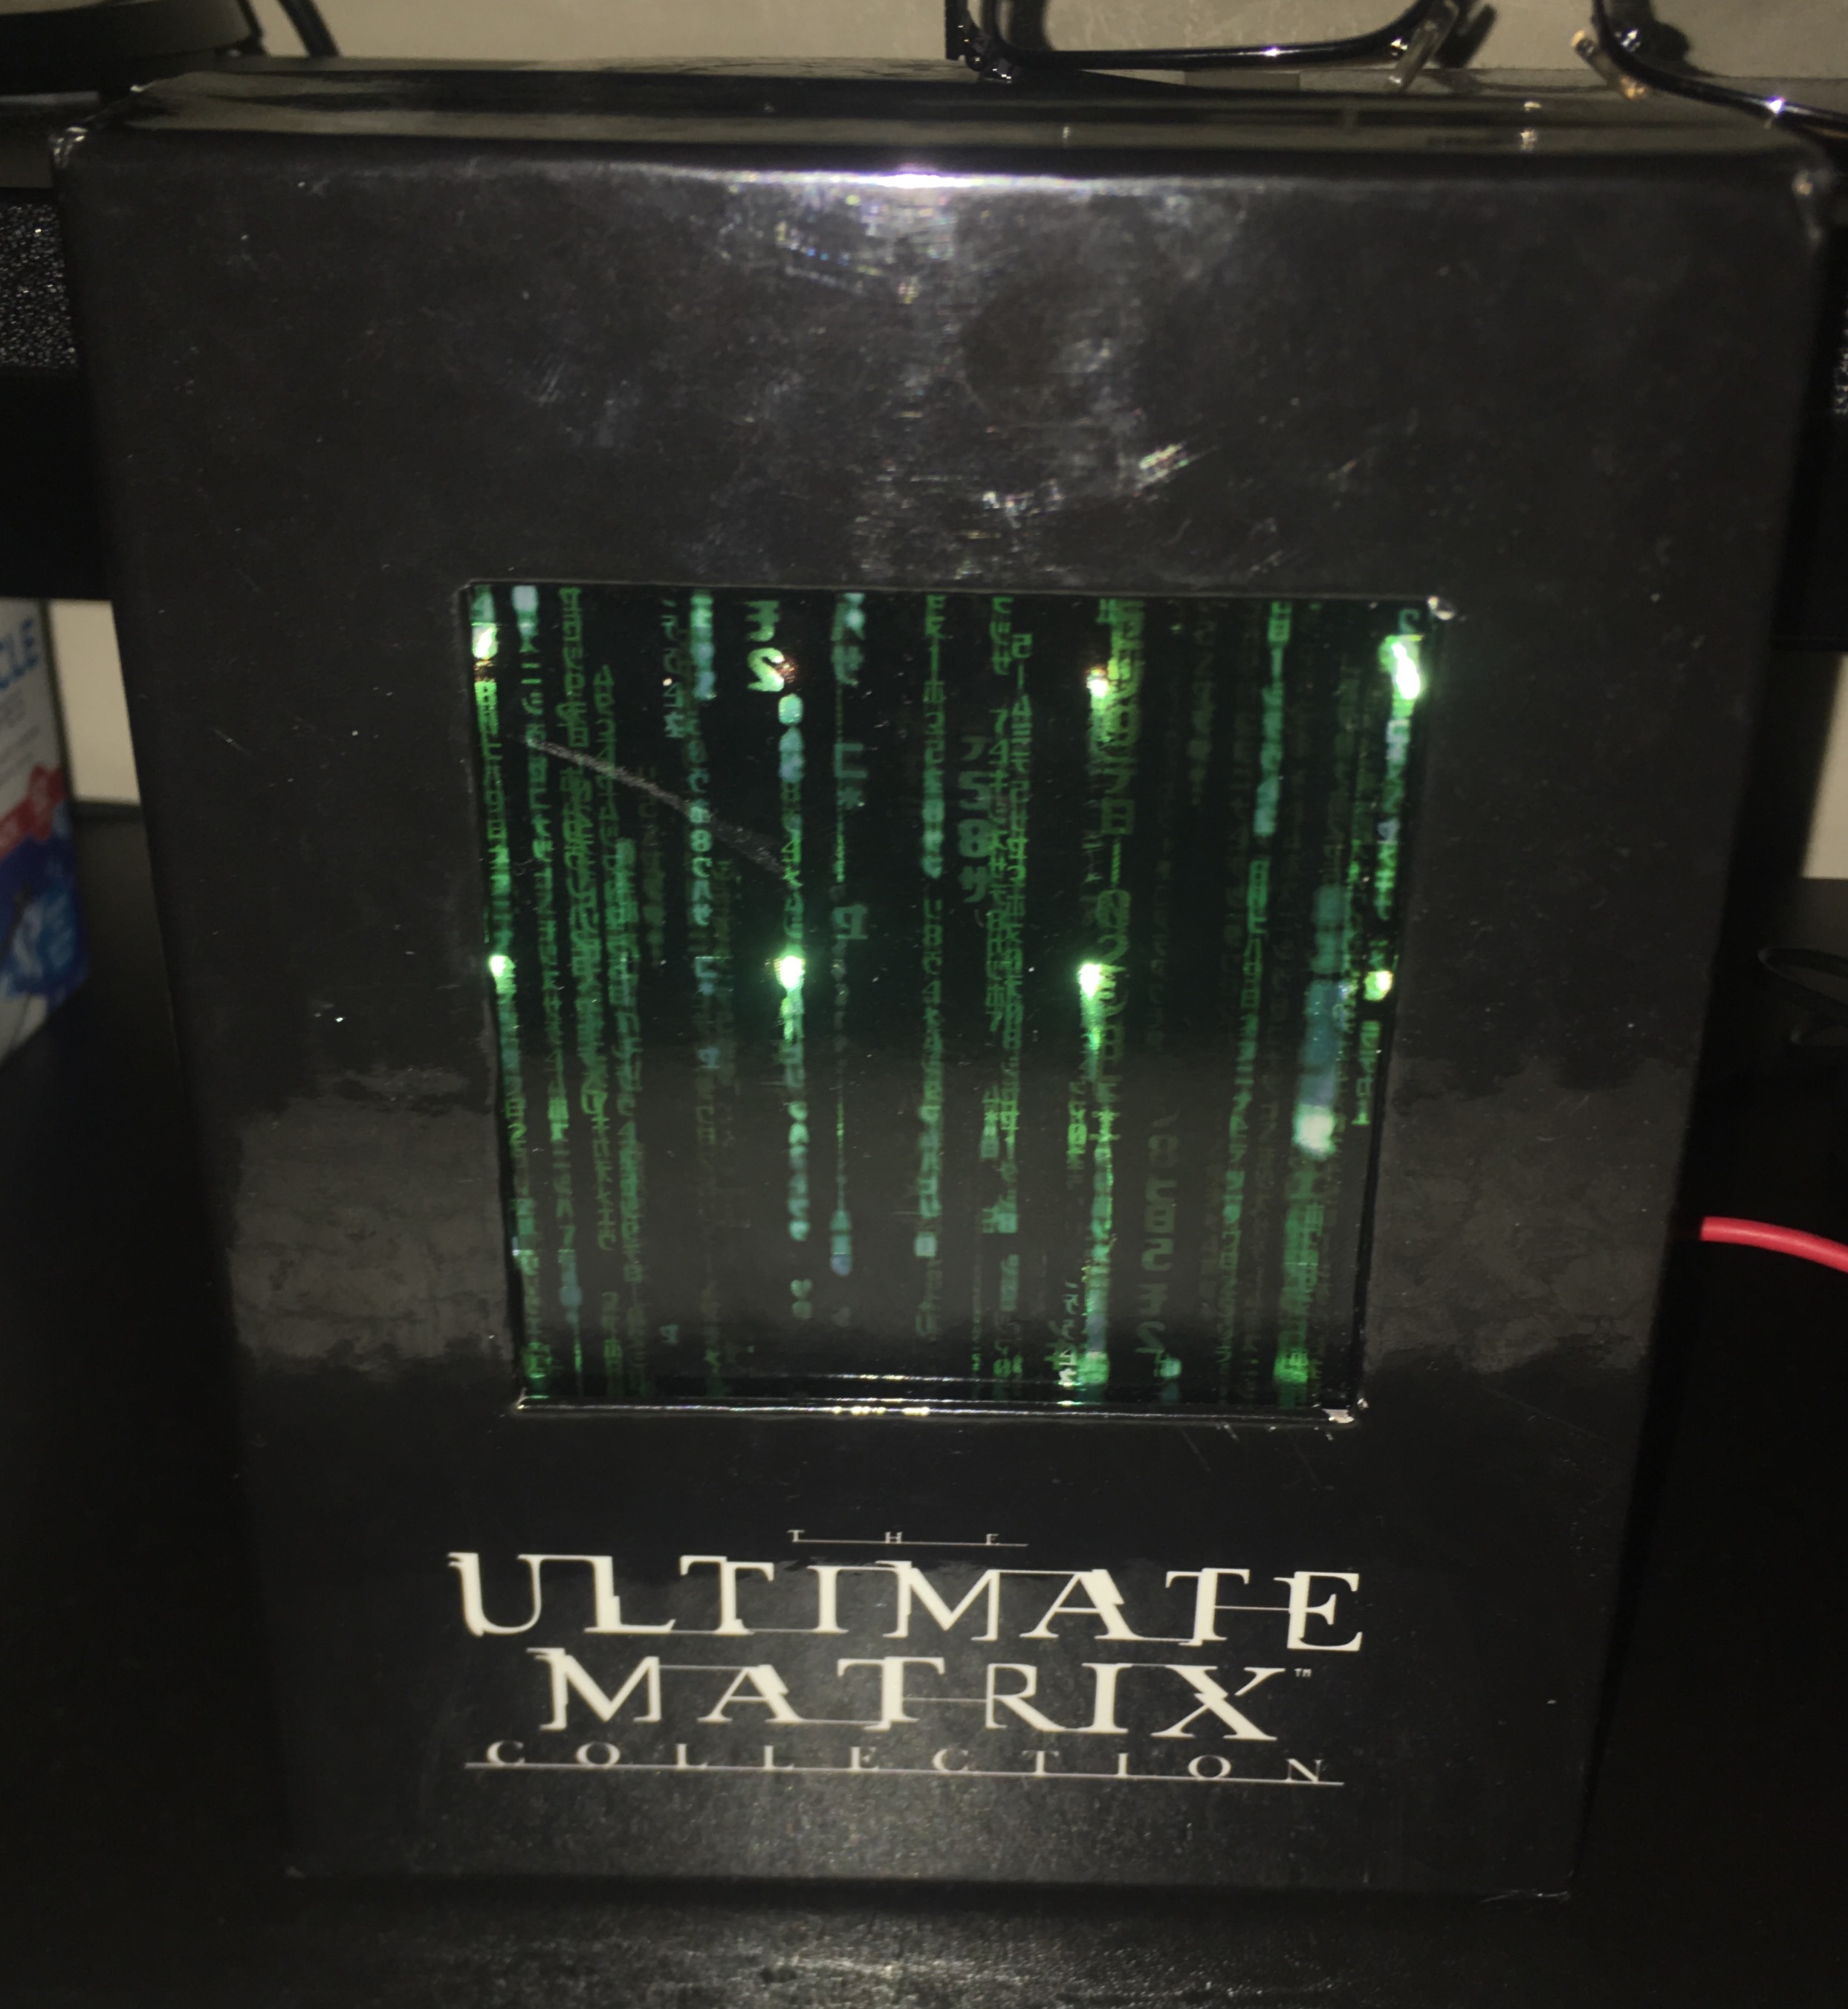 Matrix.JPG